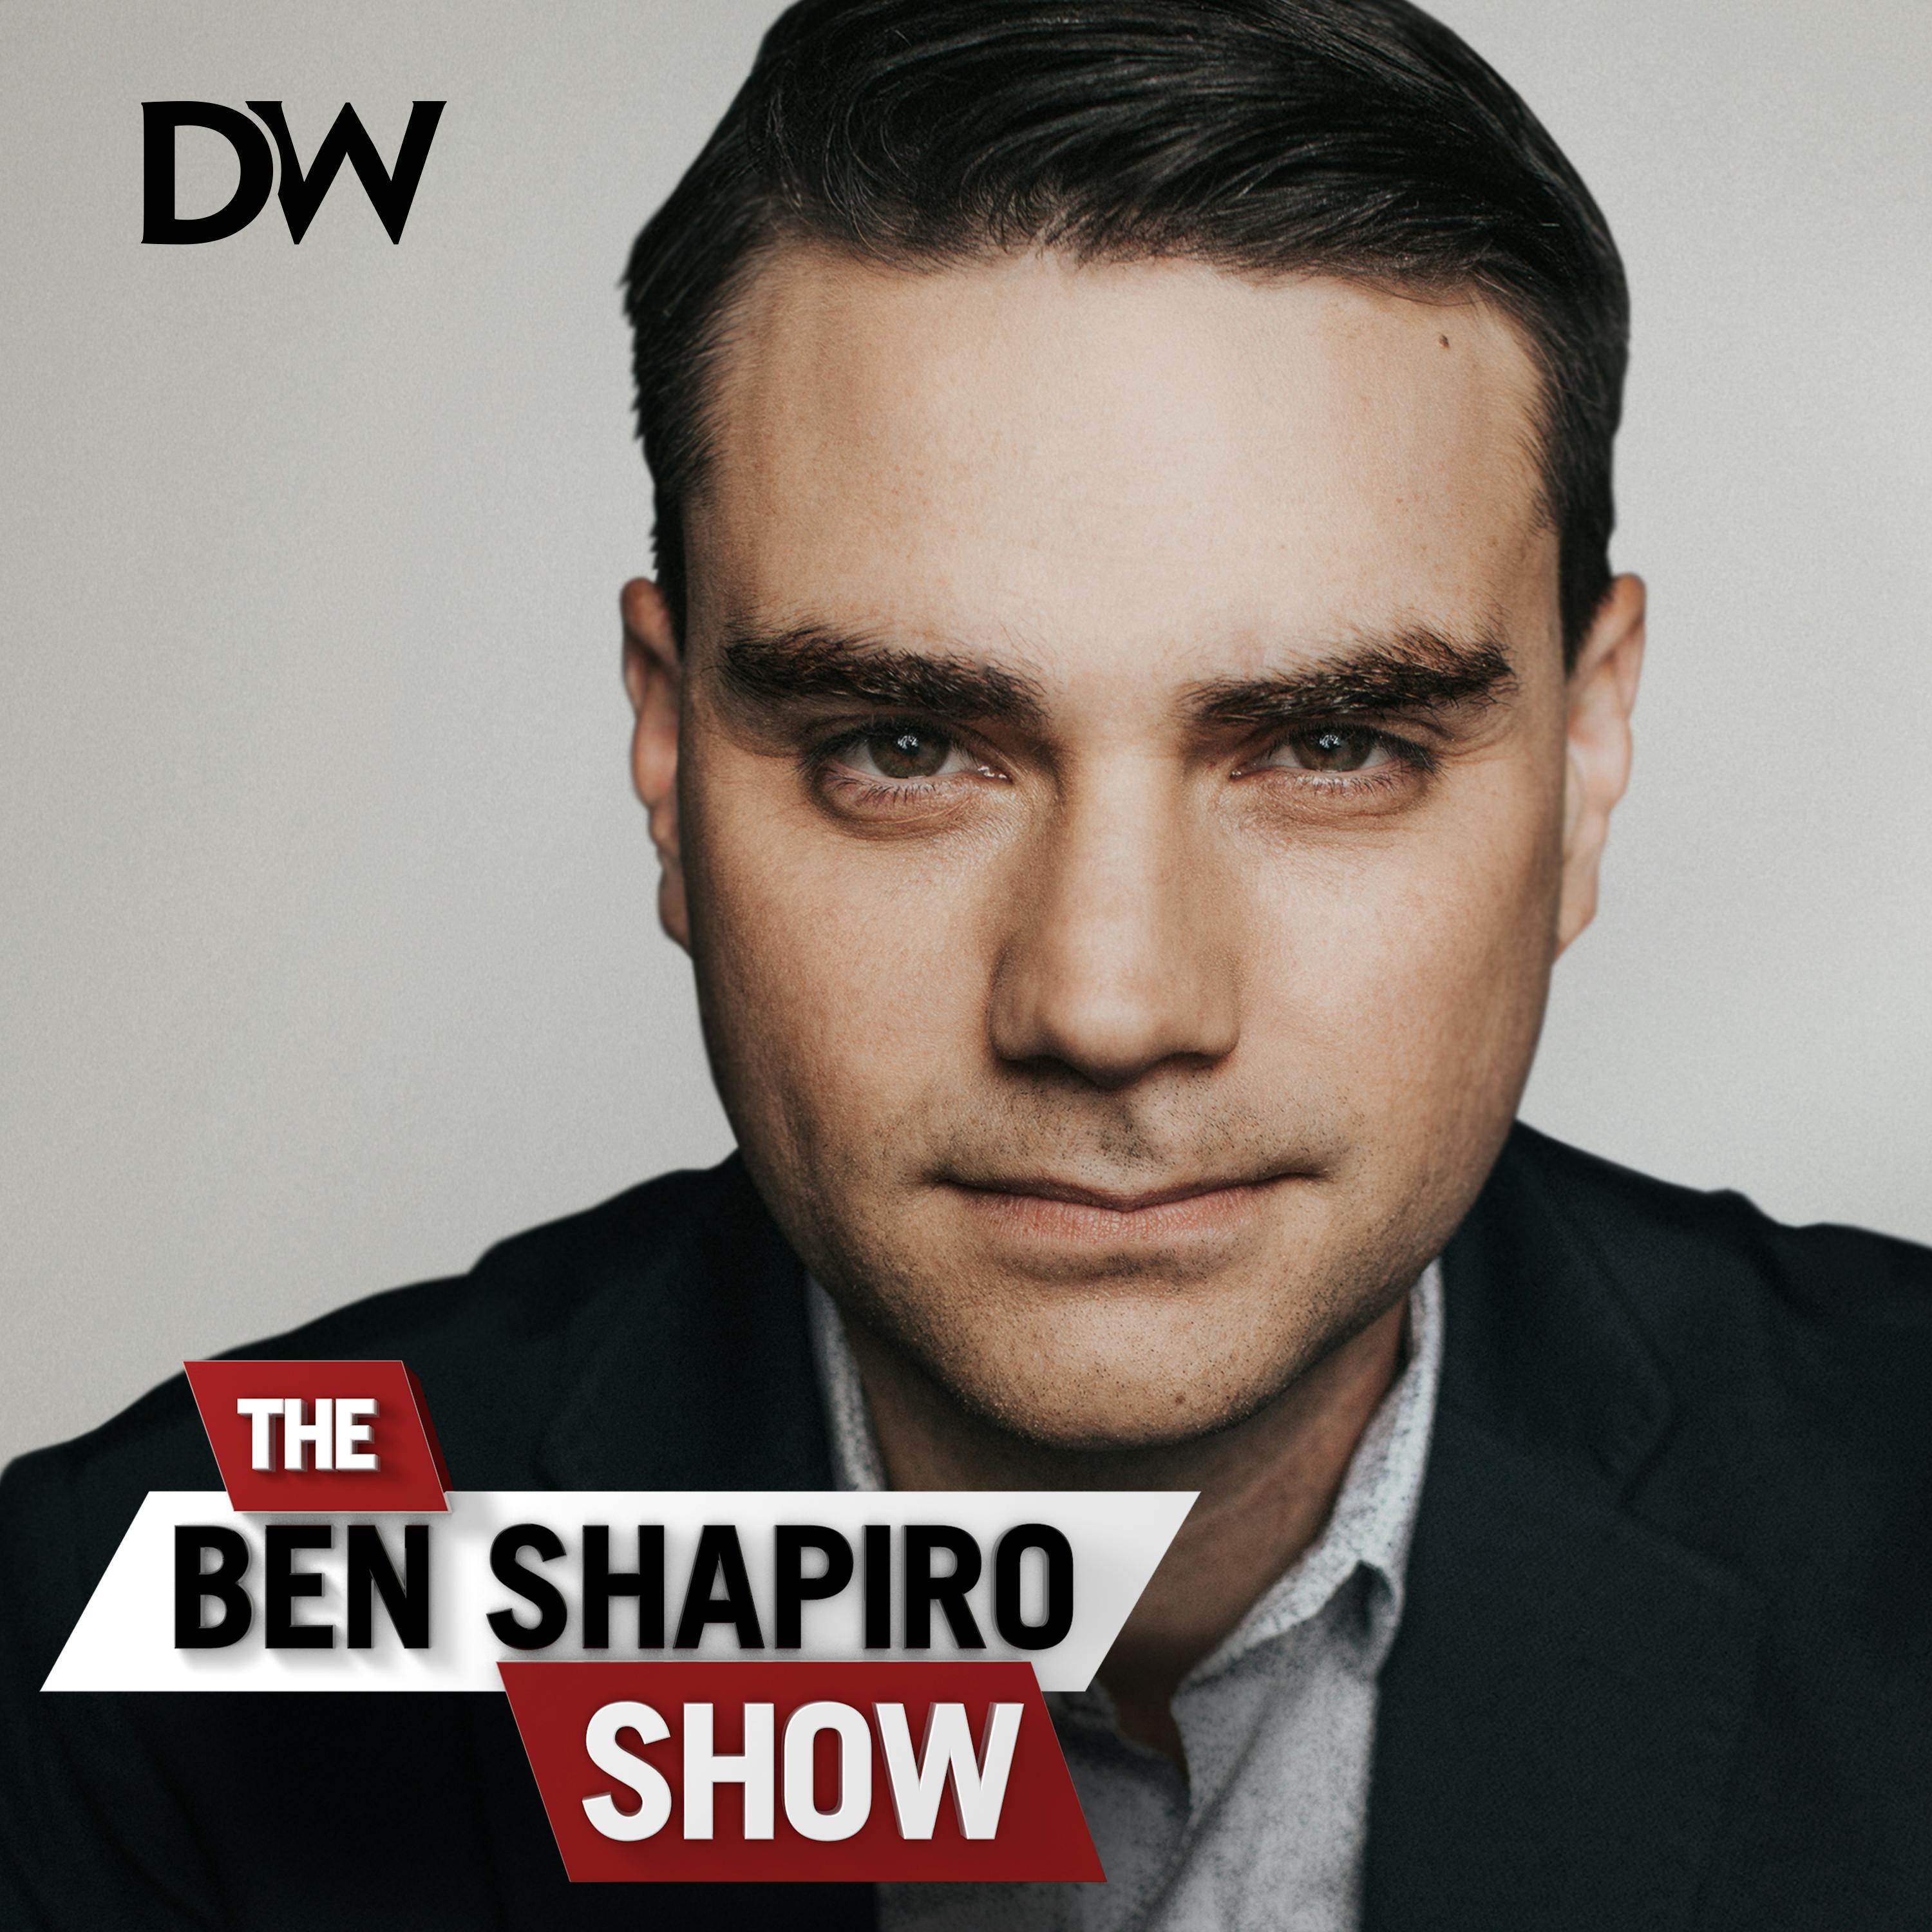 The Ben Shapiro Show podcast